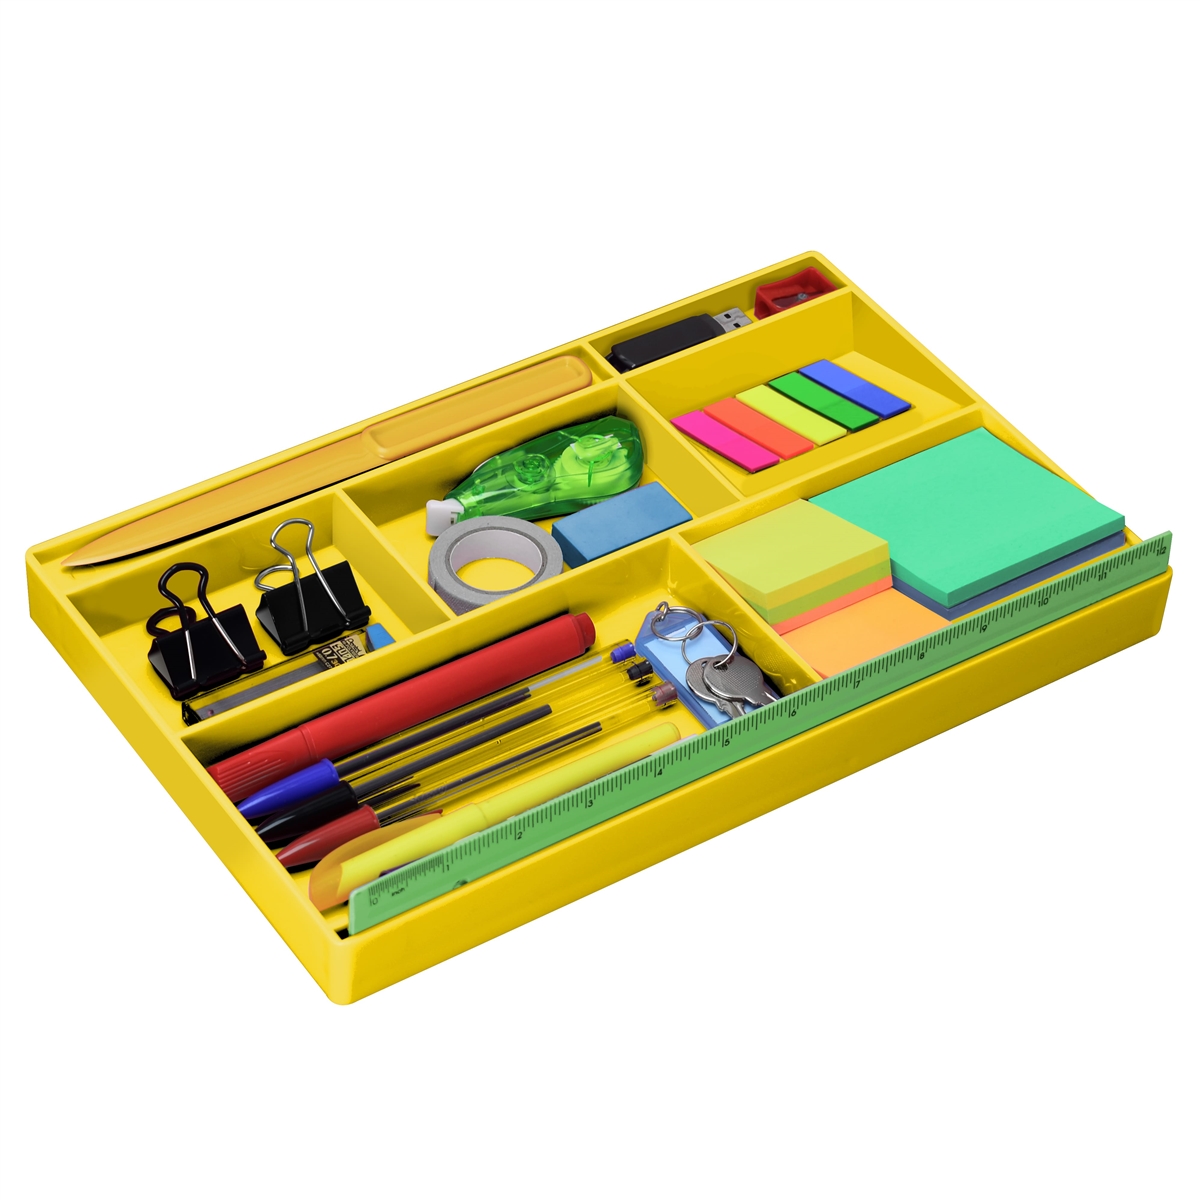 Acrimet Drawer Organizer Bin Multi-Purpose Storage for Desk Supplies and Accessories (Plastic) (Solid Yellow Color)